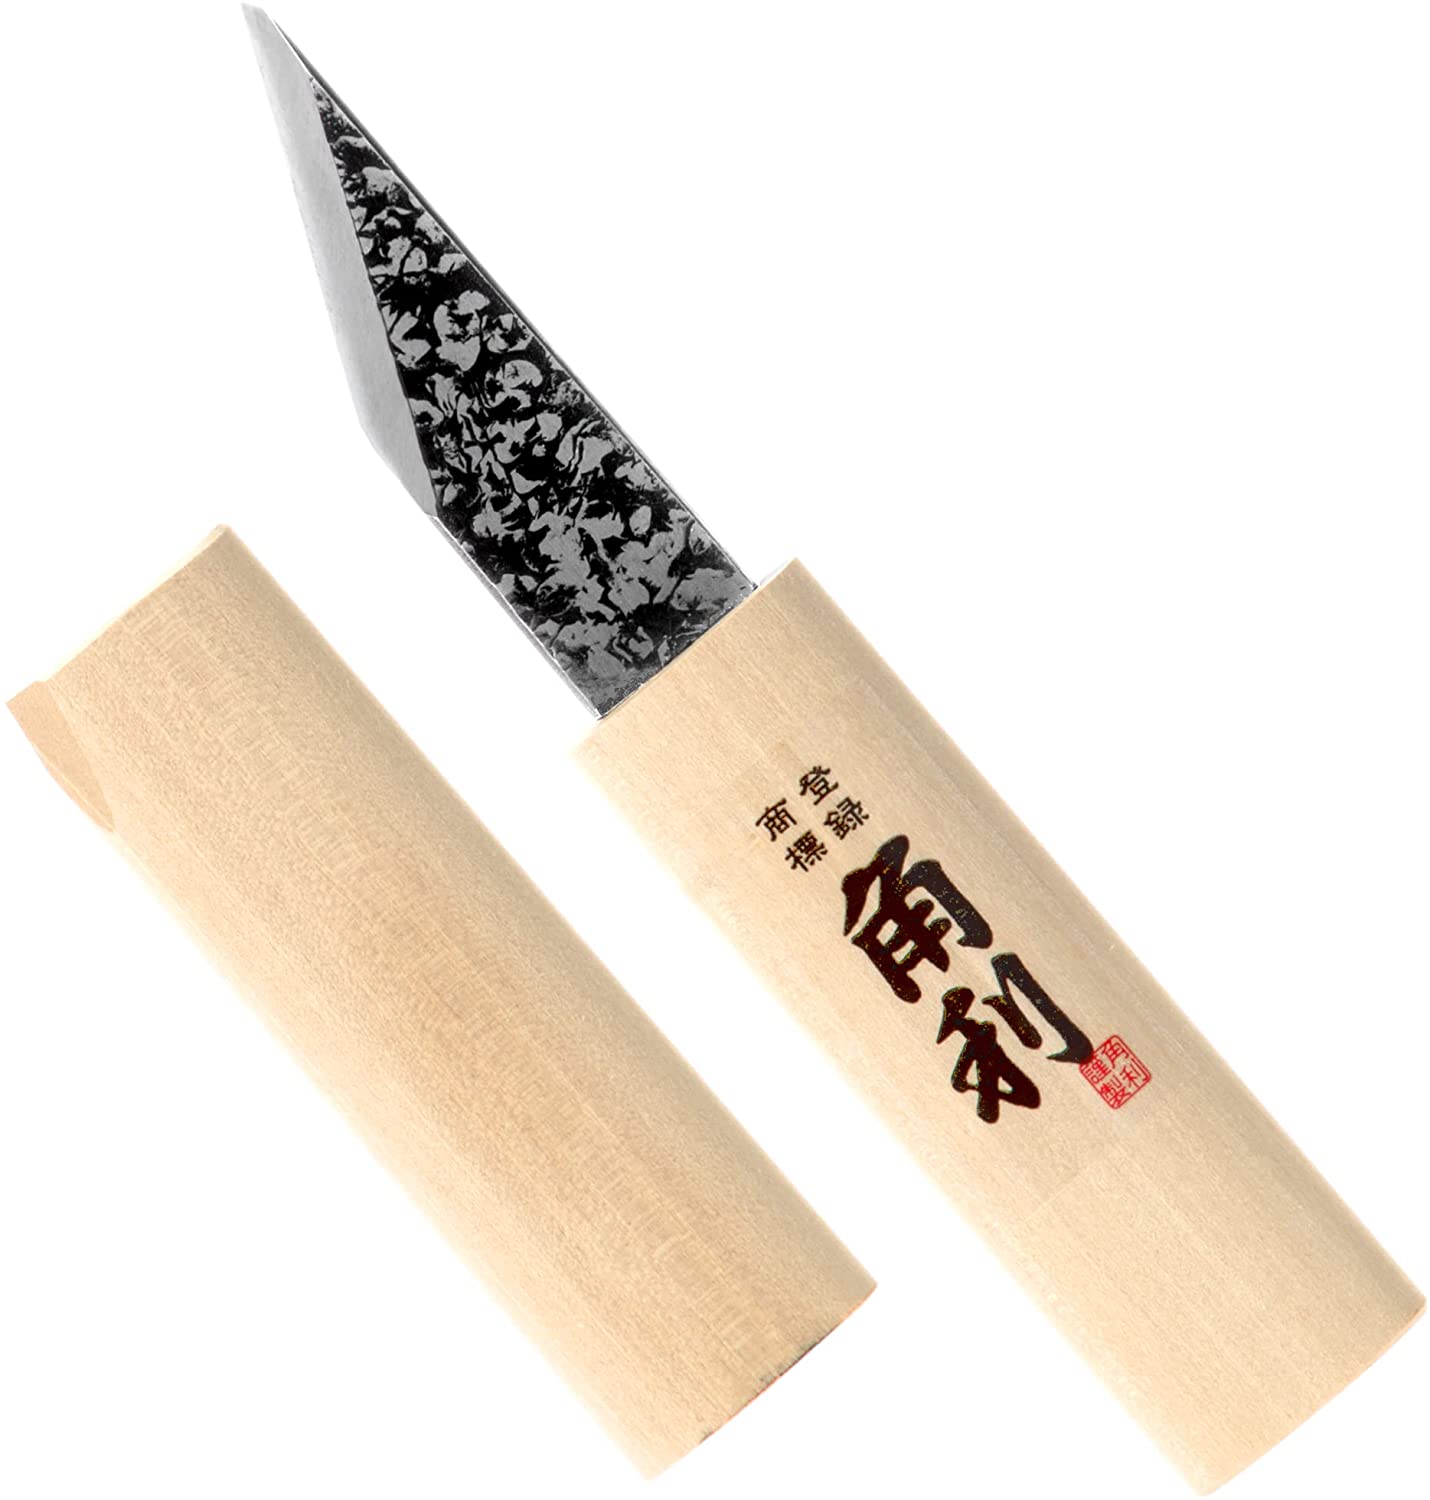 KAKURI Kiridashi Knife Left Hand 18mm, Left Handed Utility Knife Tool for Wood Marking, Scribing, Carving, Whittling, Woodworking, Hand Forged